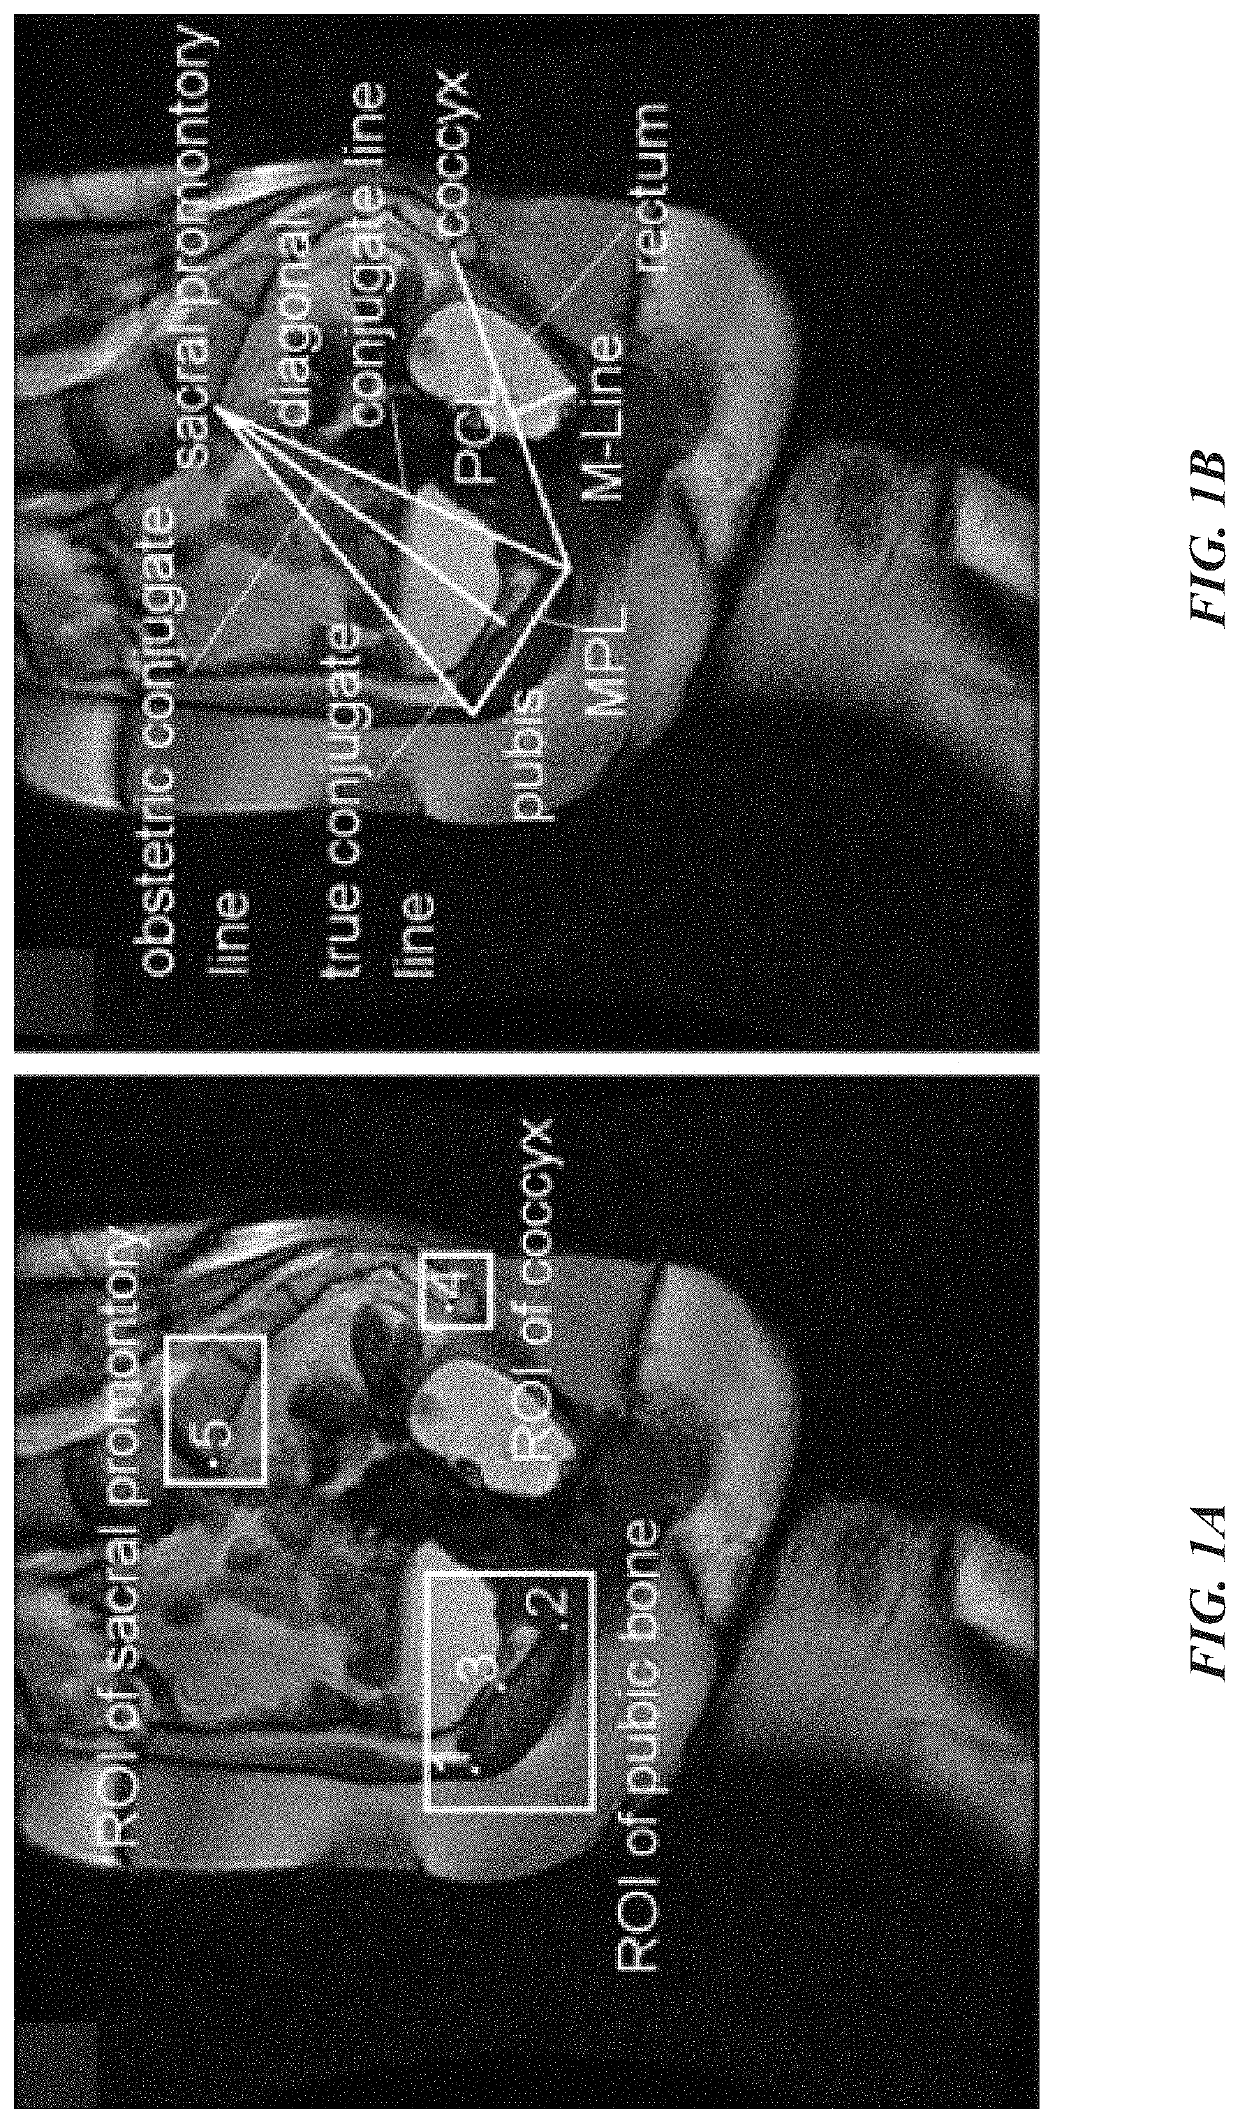 Image-based automated measurement model to predict pelvic organ prolapse